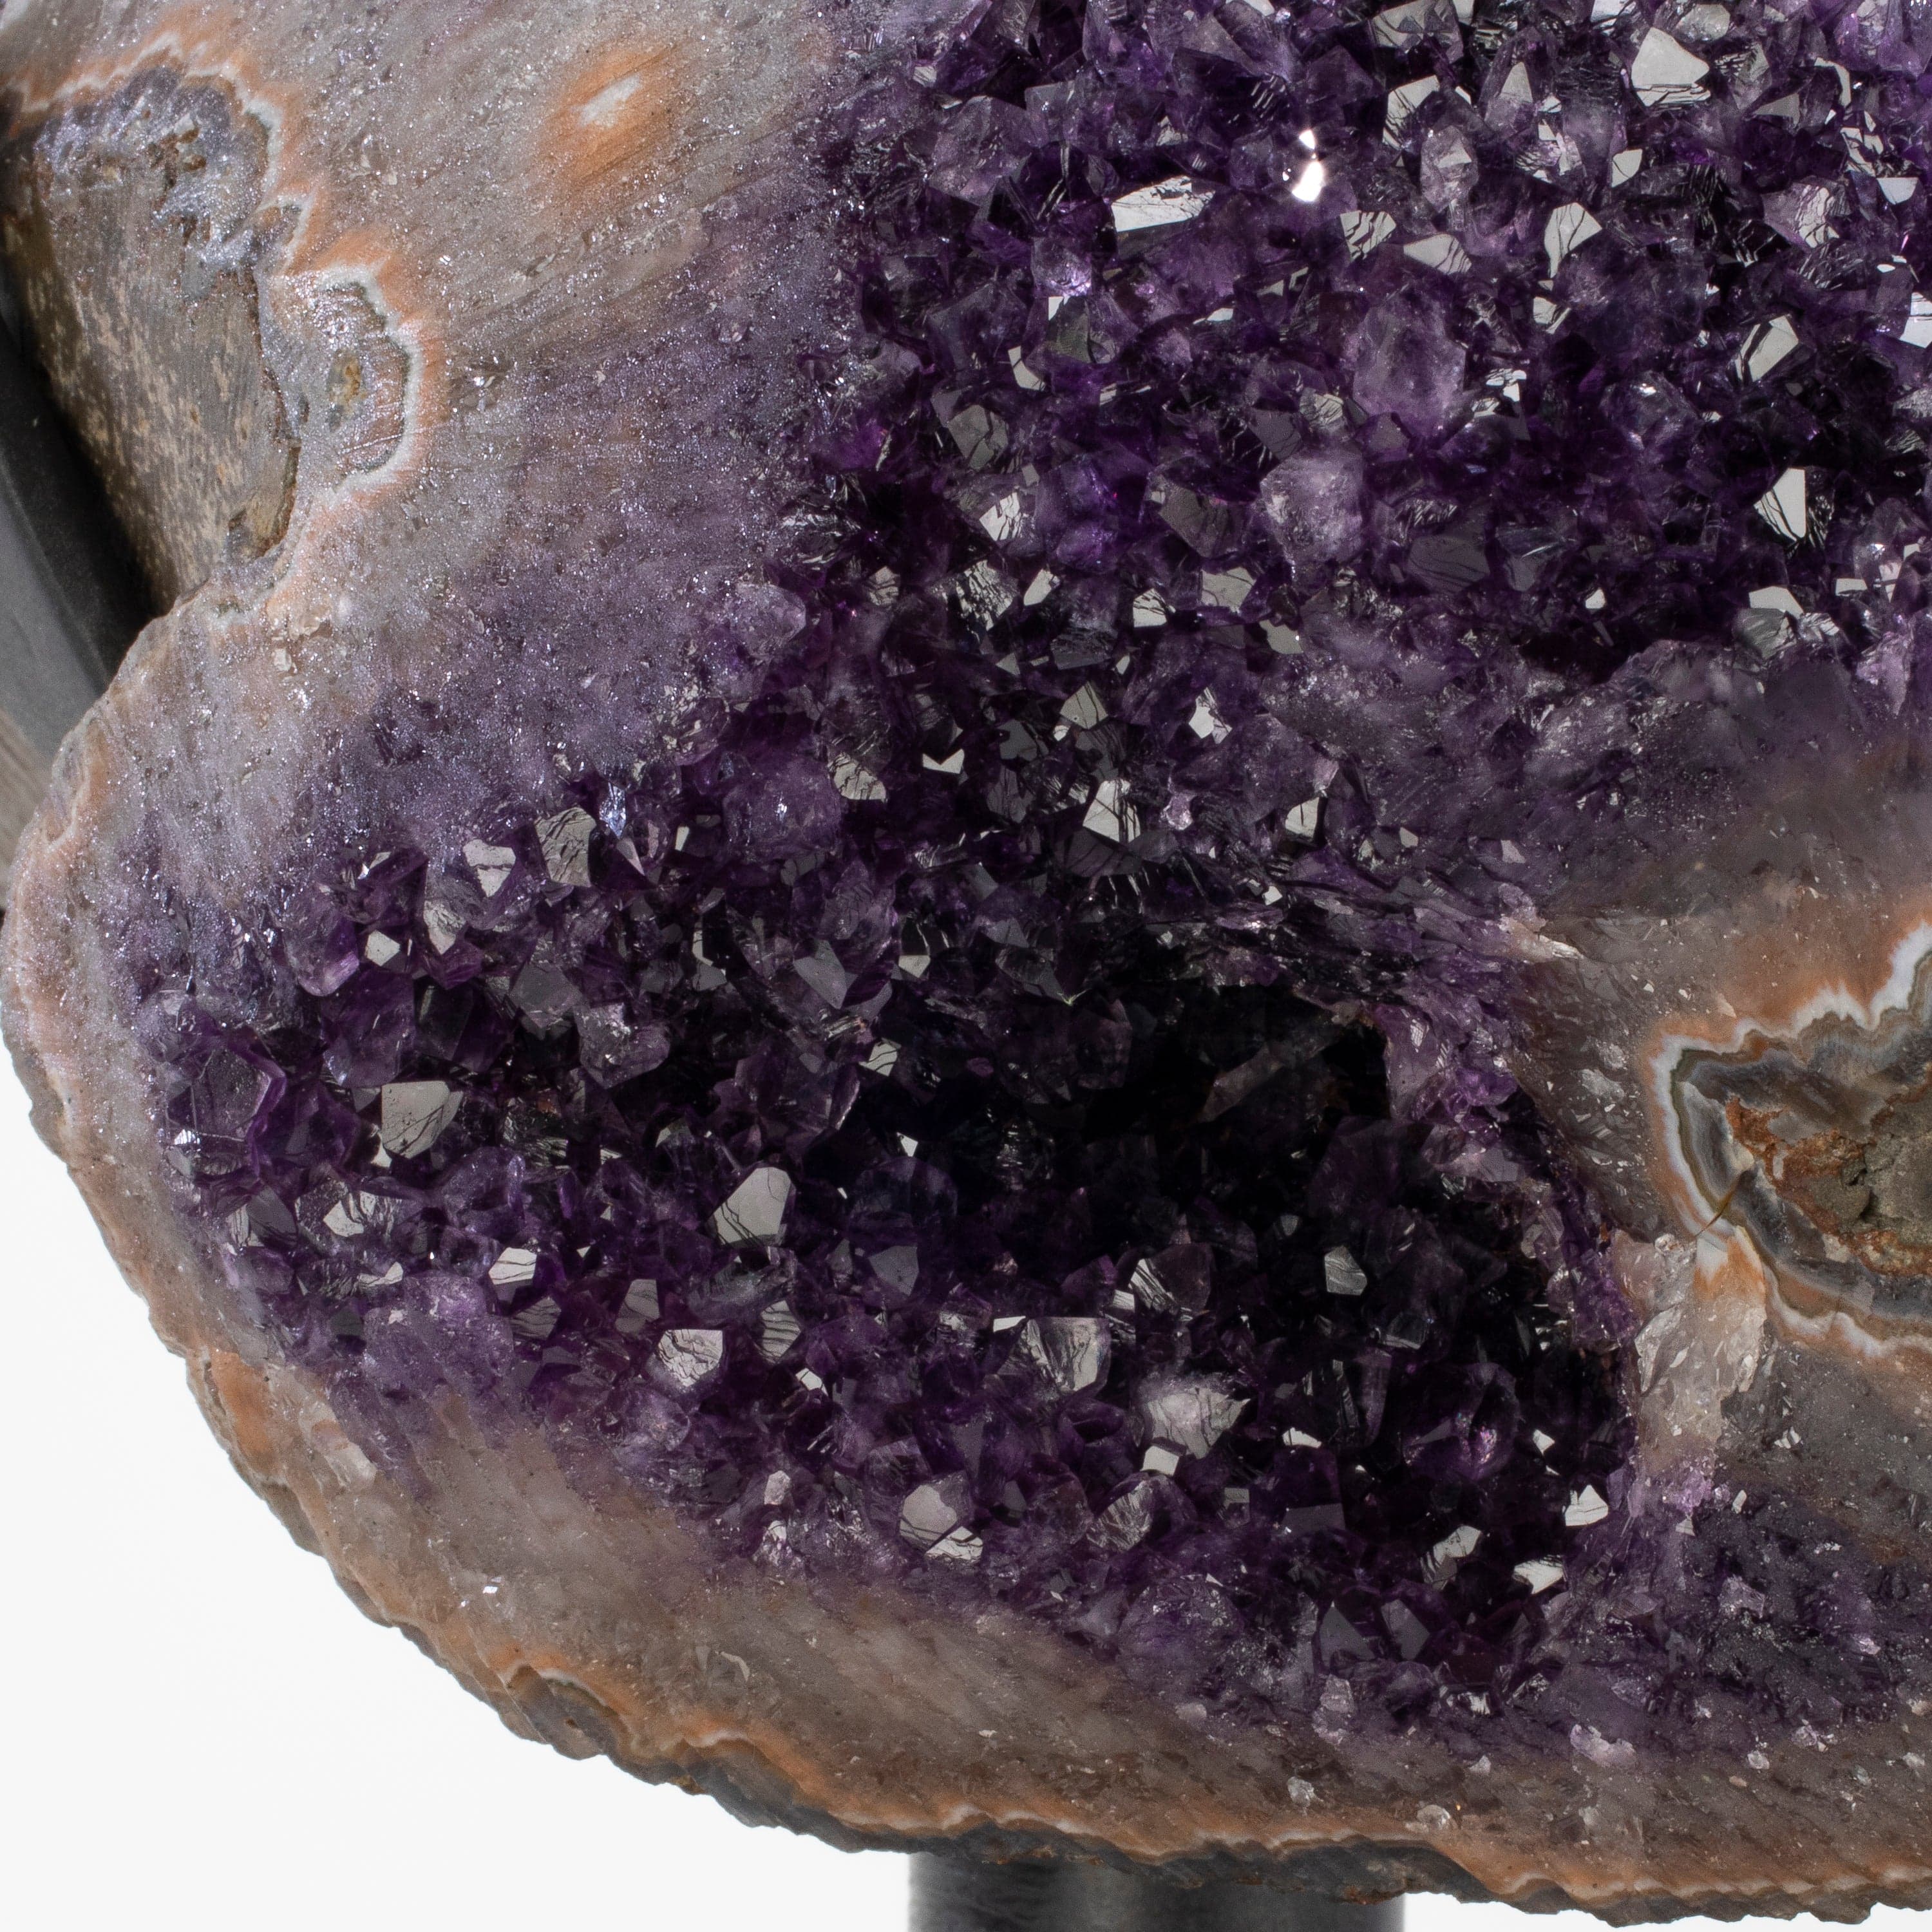 KALIFANO Amethyst Uruguayan Amethyst Geode Specimen 25.5" / 70 lbs (Alex Private Collection) UAG400000.001